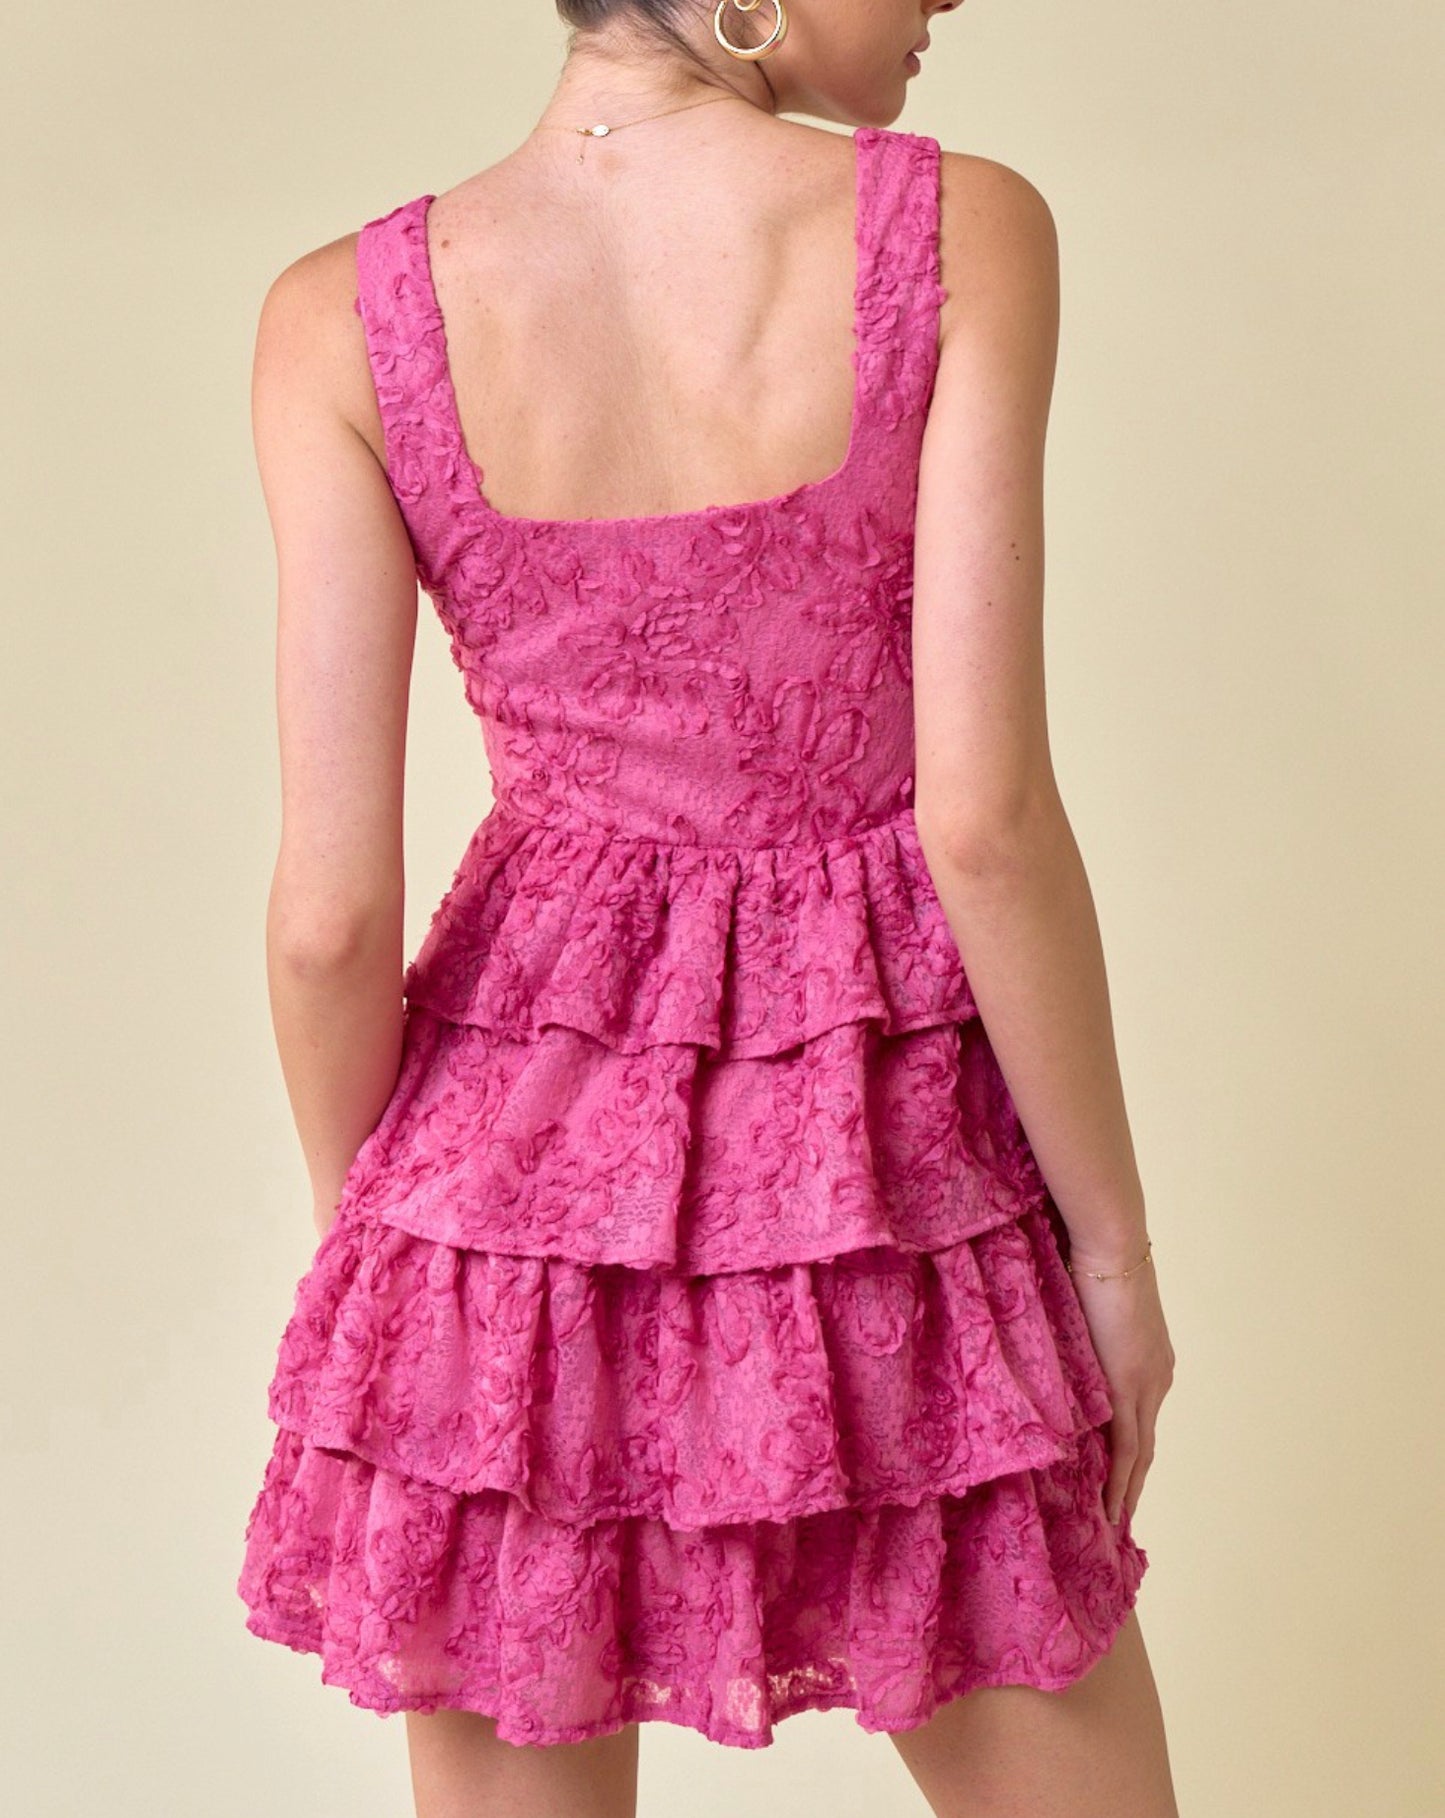 Rosy ruffle dress